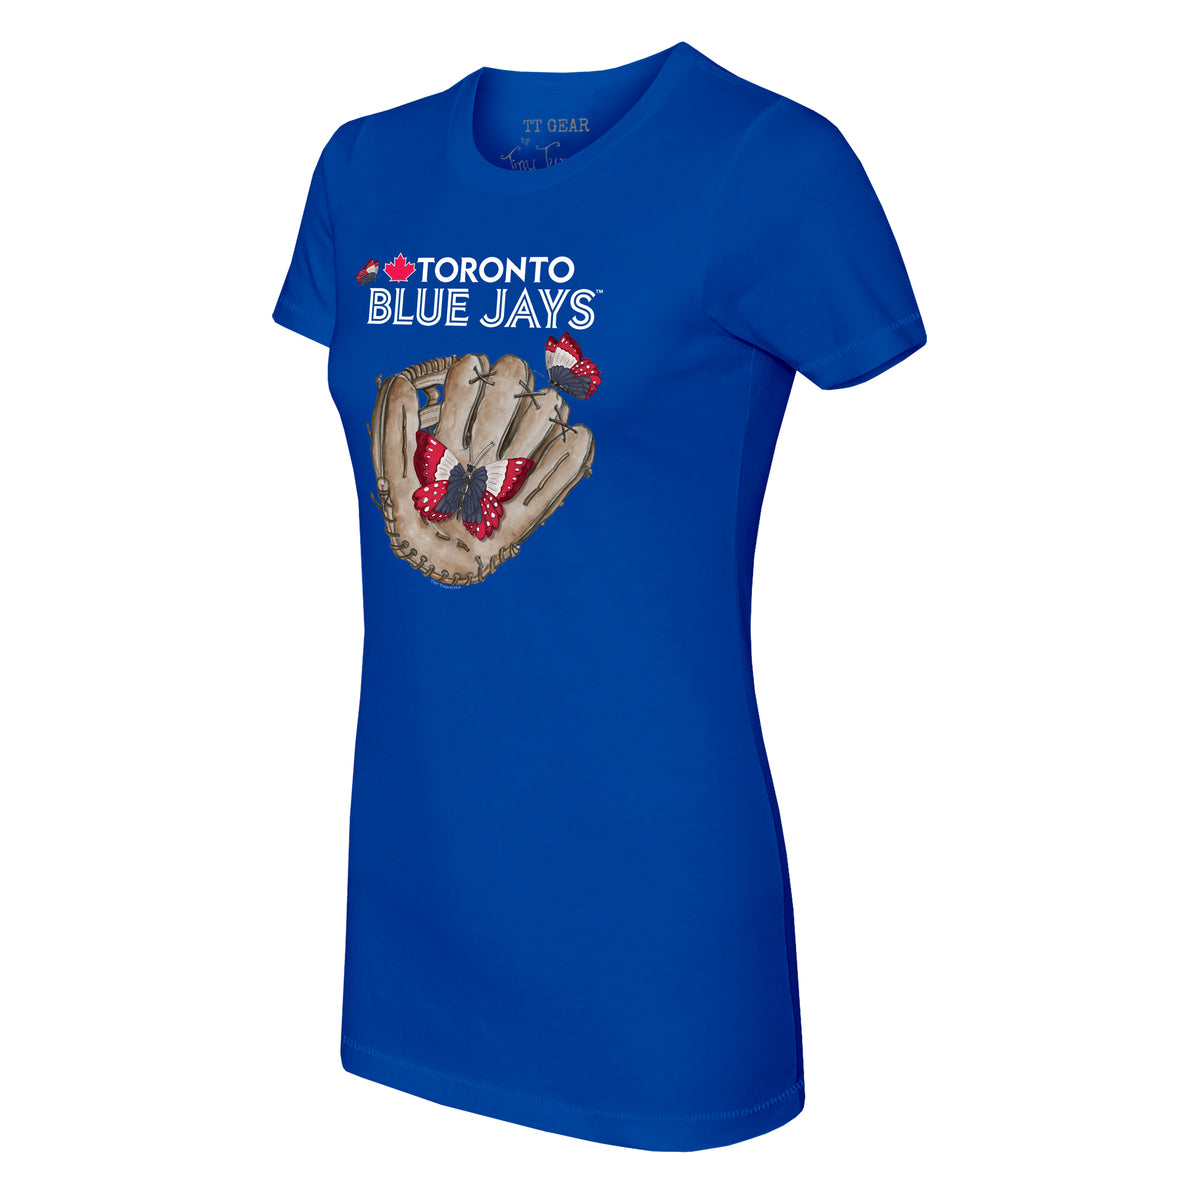 Toronto Blue Jays Butterfly Glove Tee Shirt